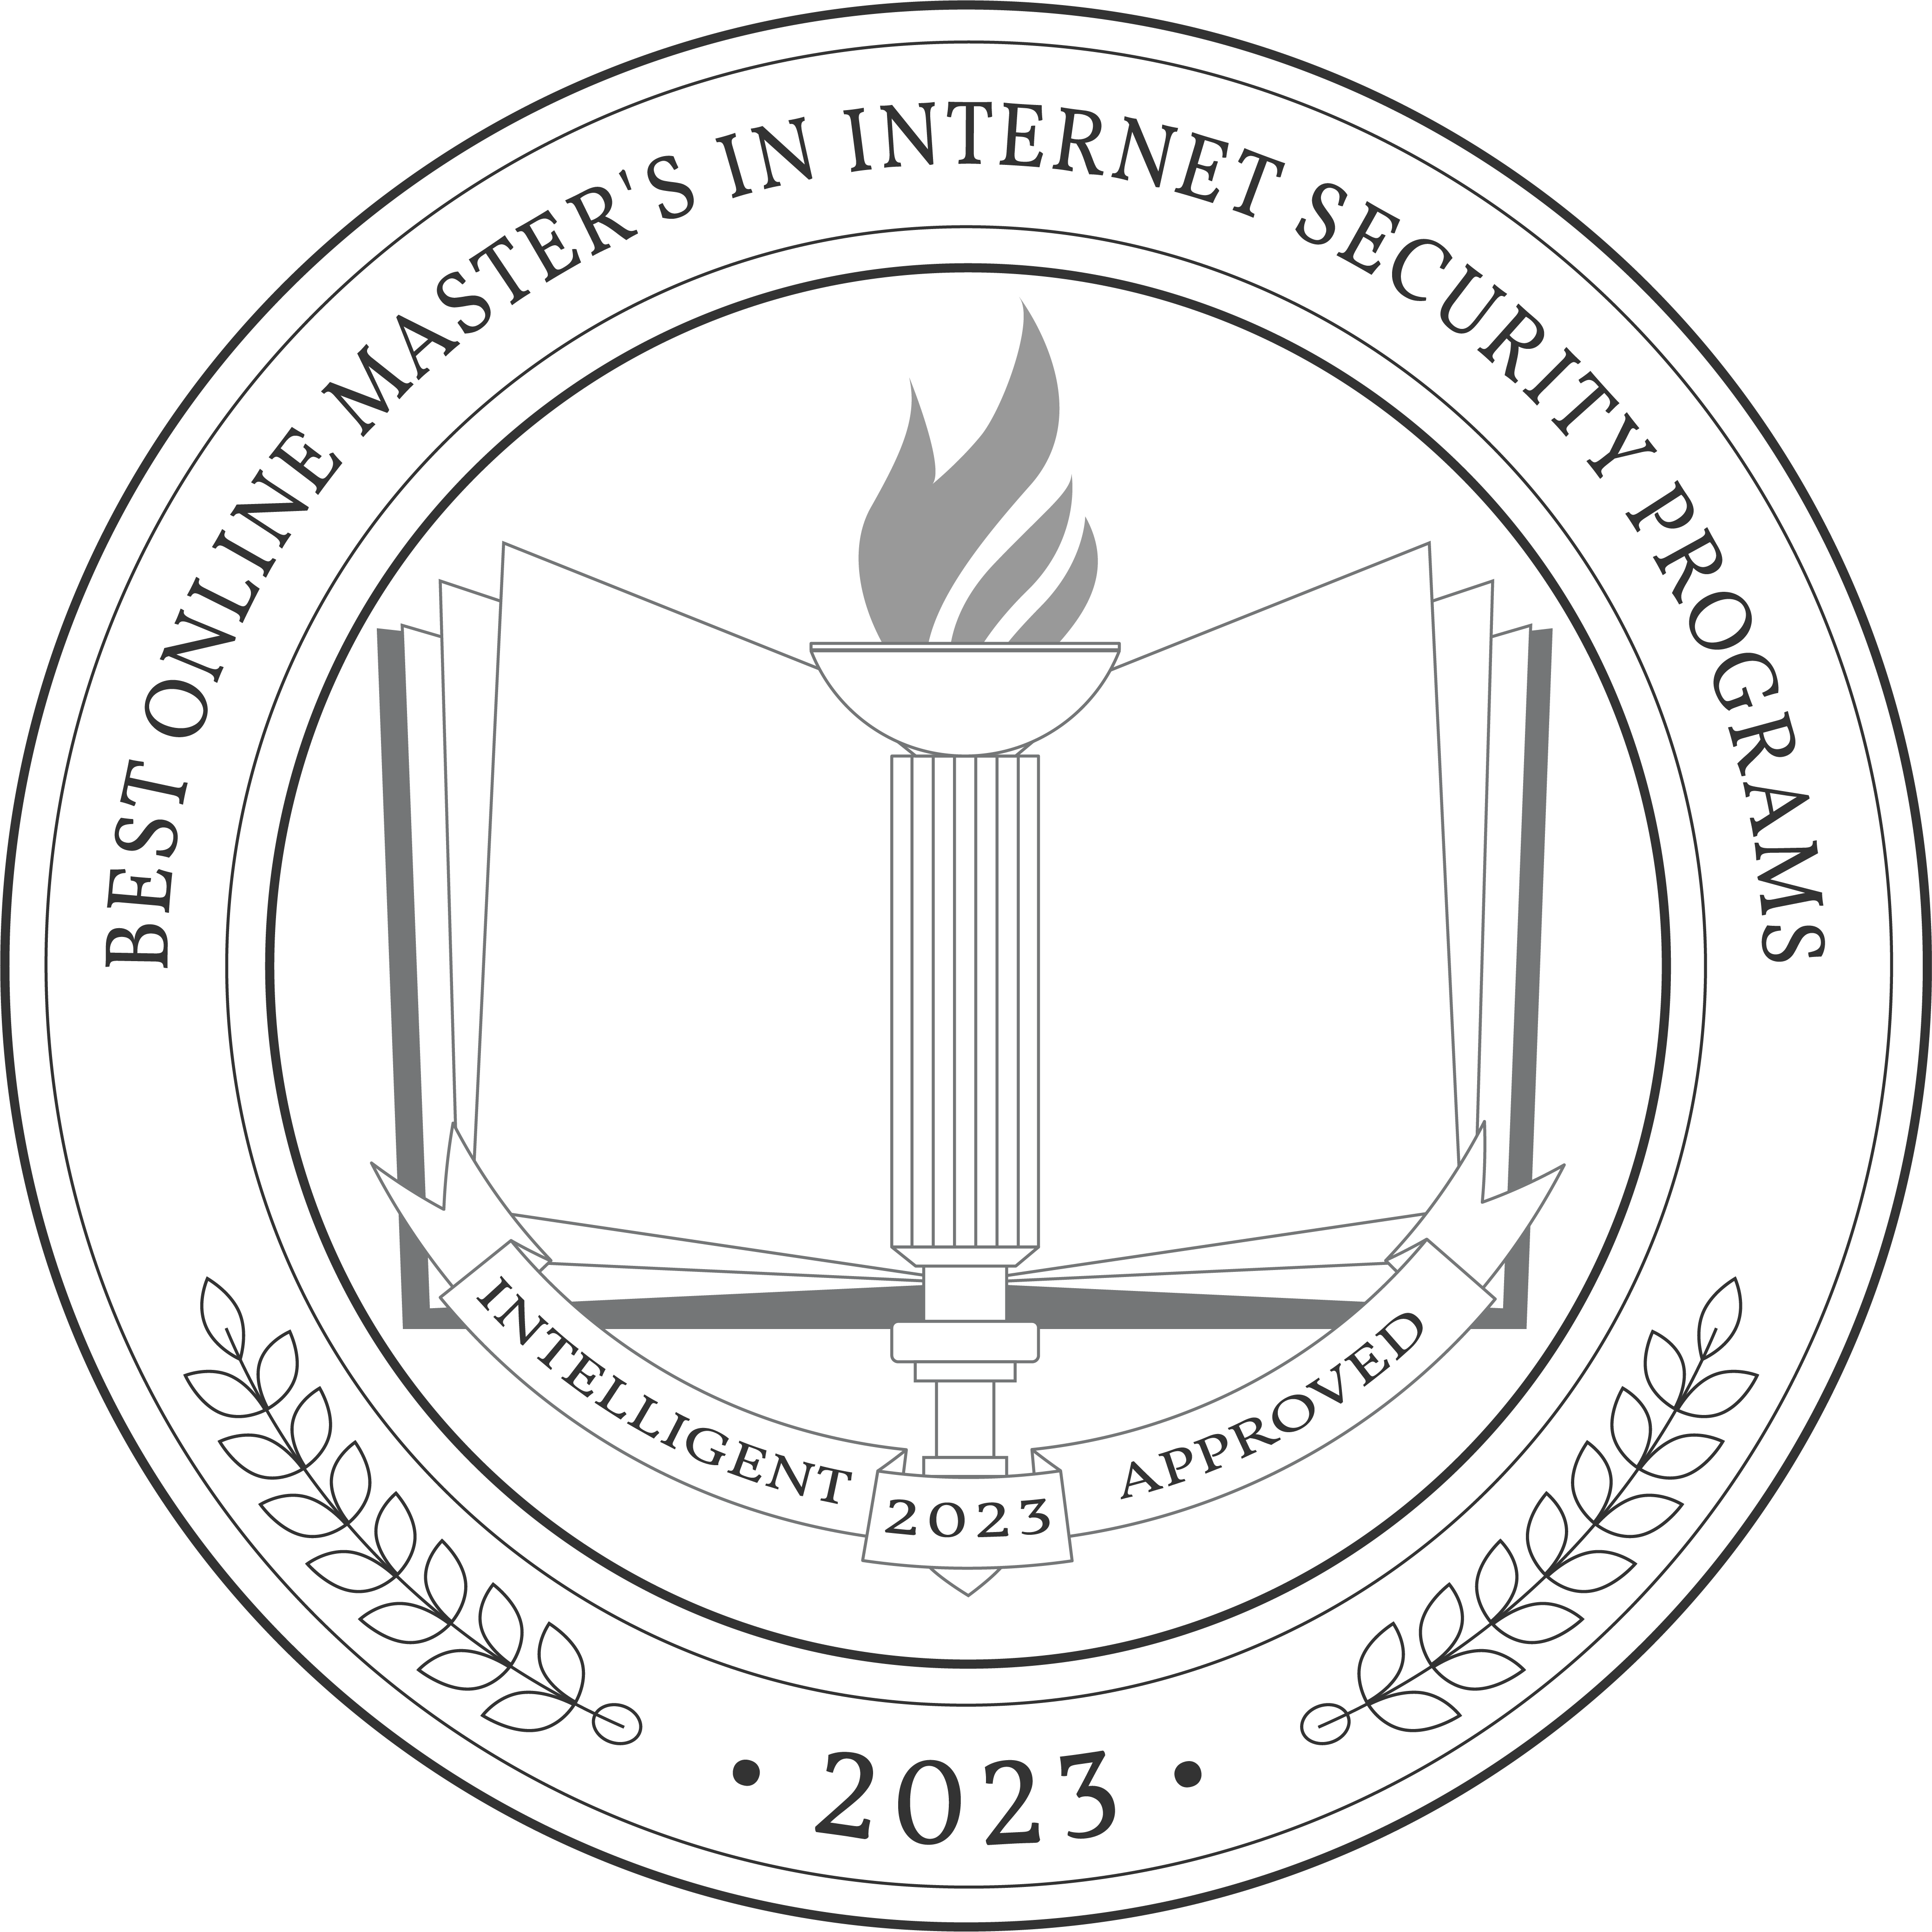 Best Online Master's in Internet Security Programs badge